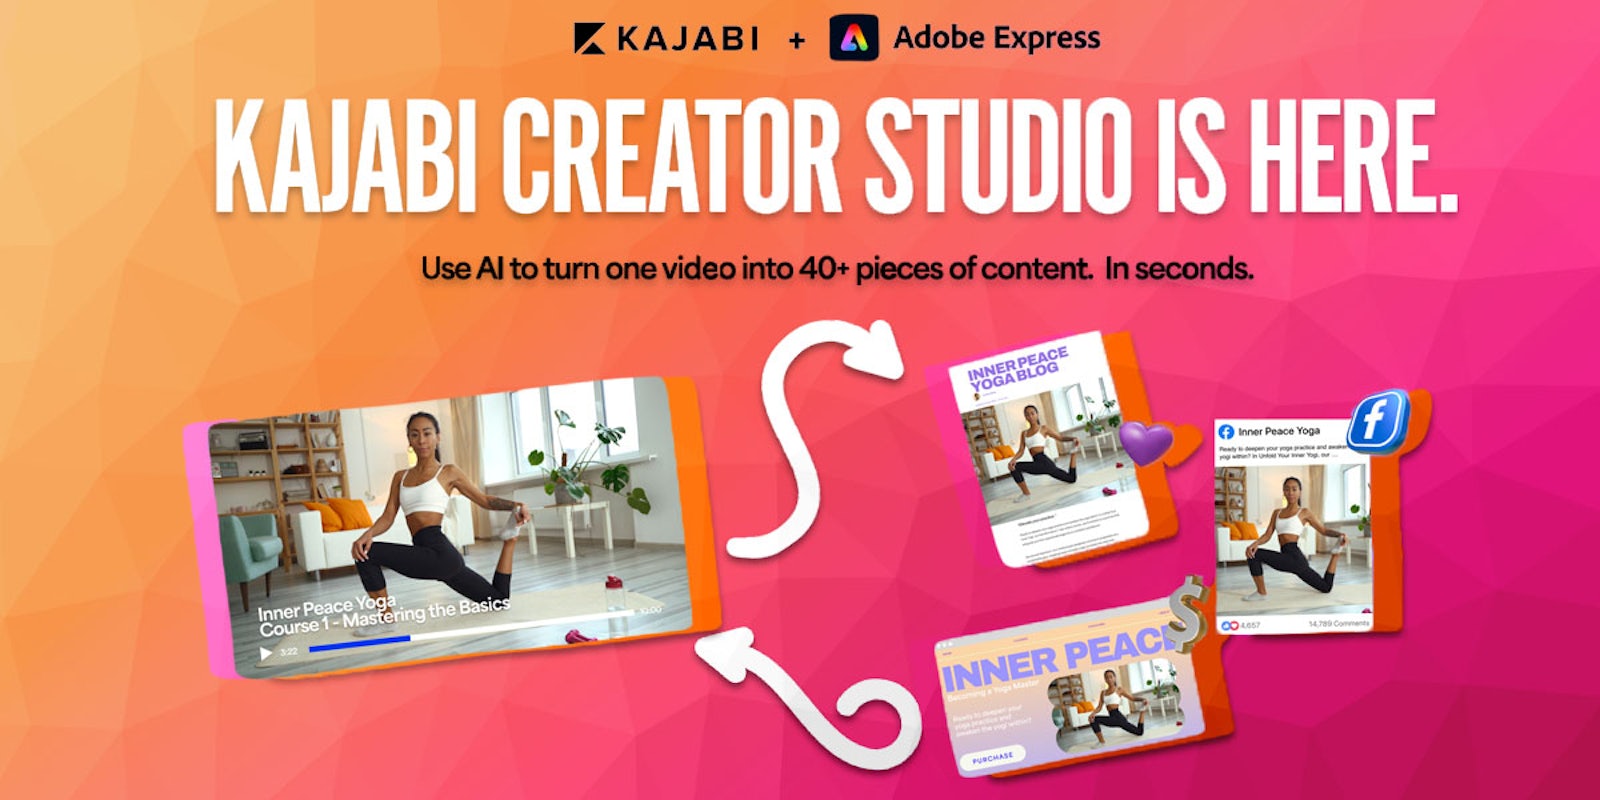 kajabi creator studio and adobe express logos